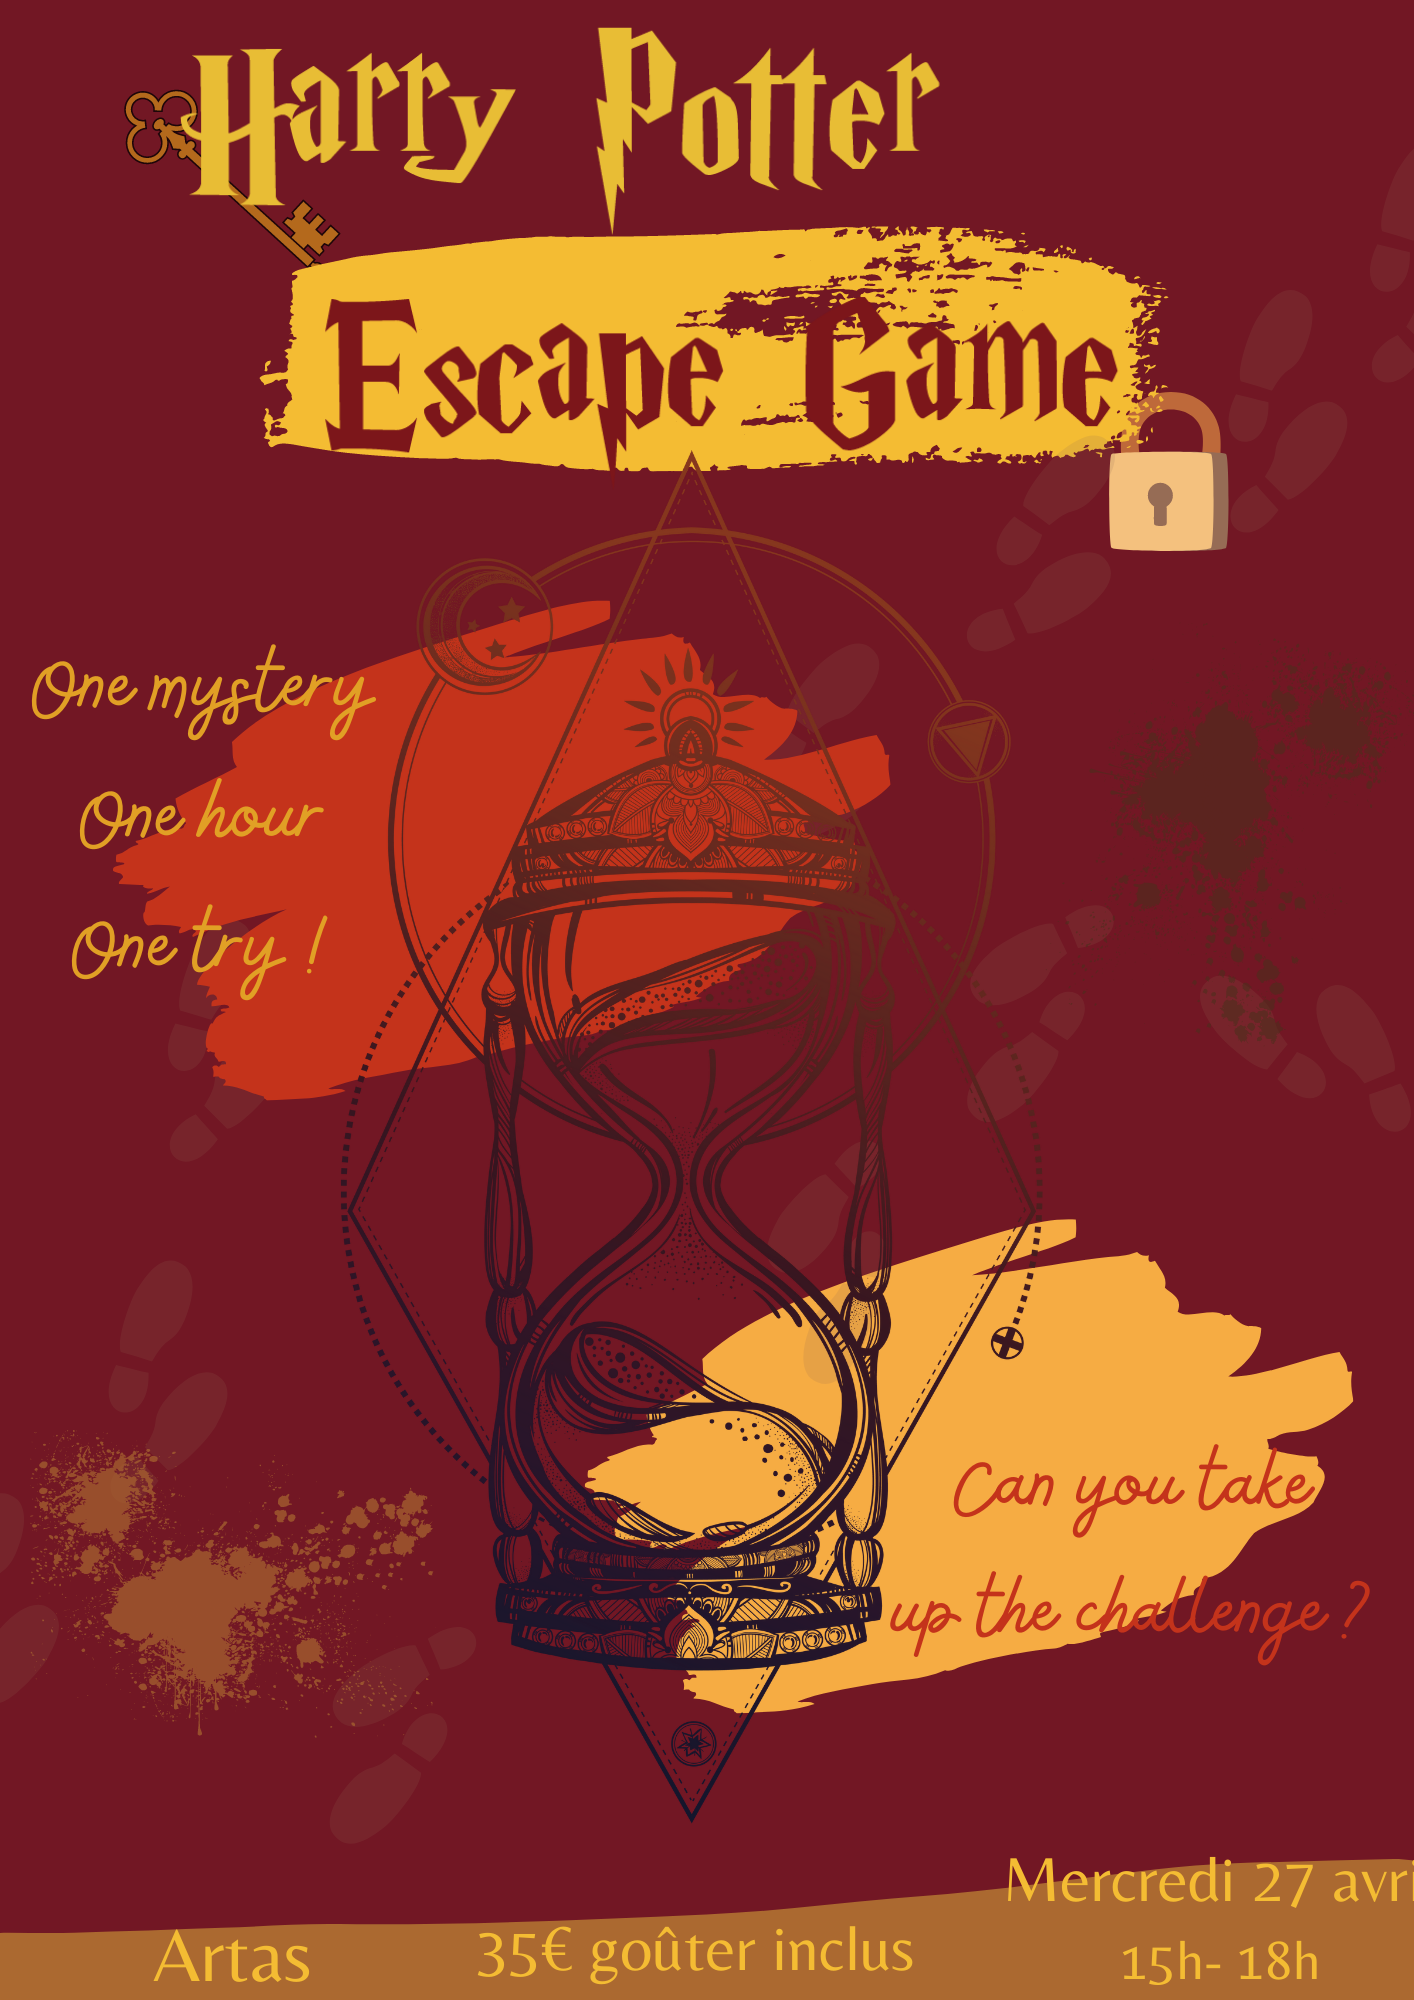 Escape game Harry Potter